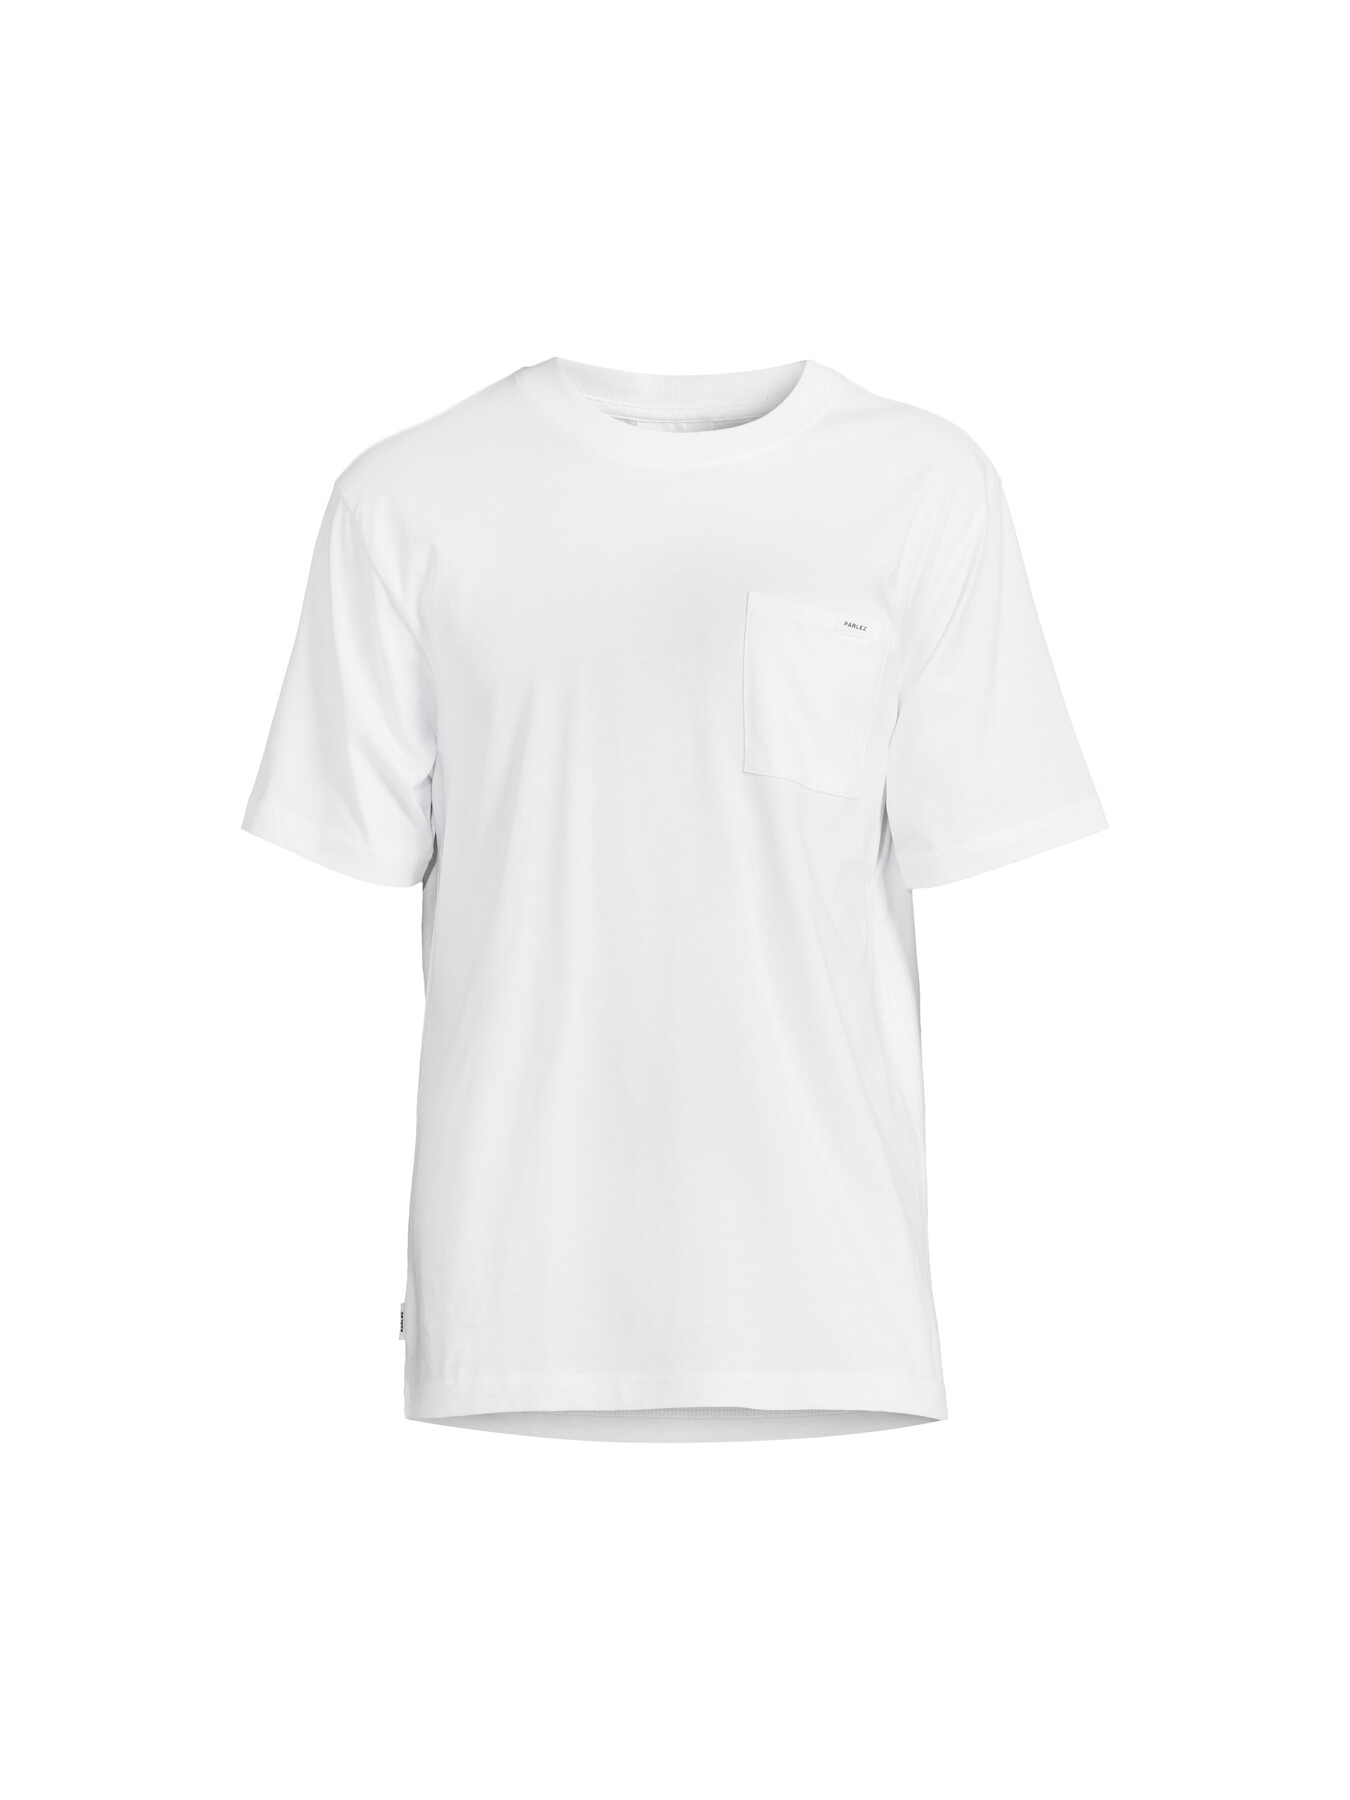 Parlez Men's Fasten T-shirt White